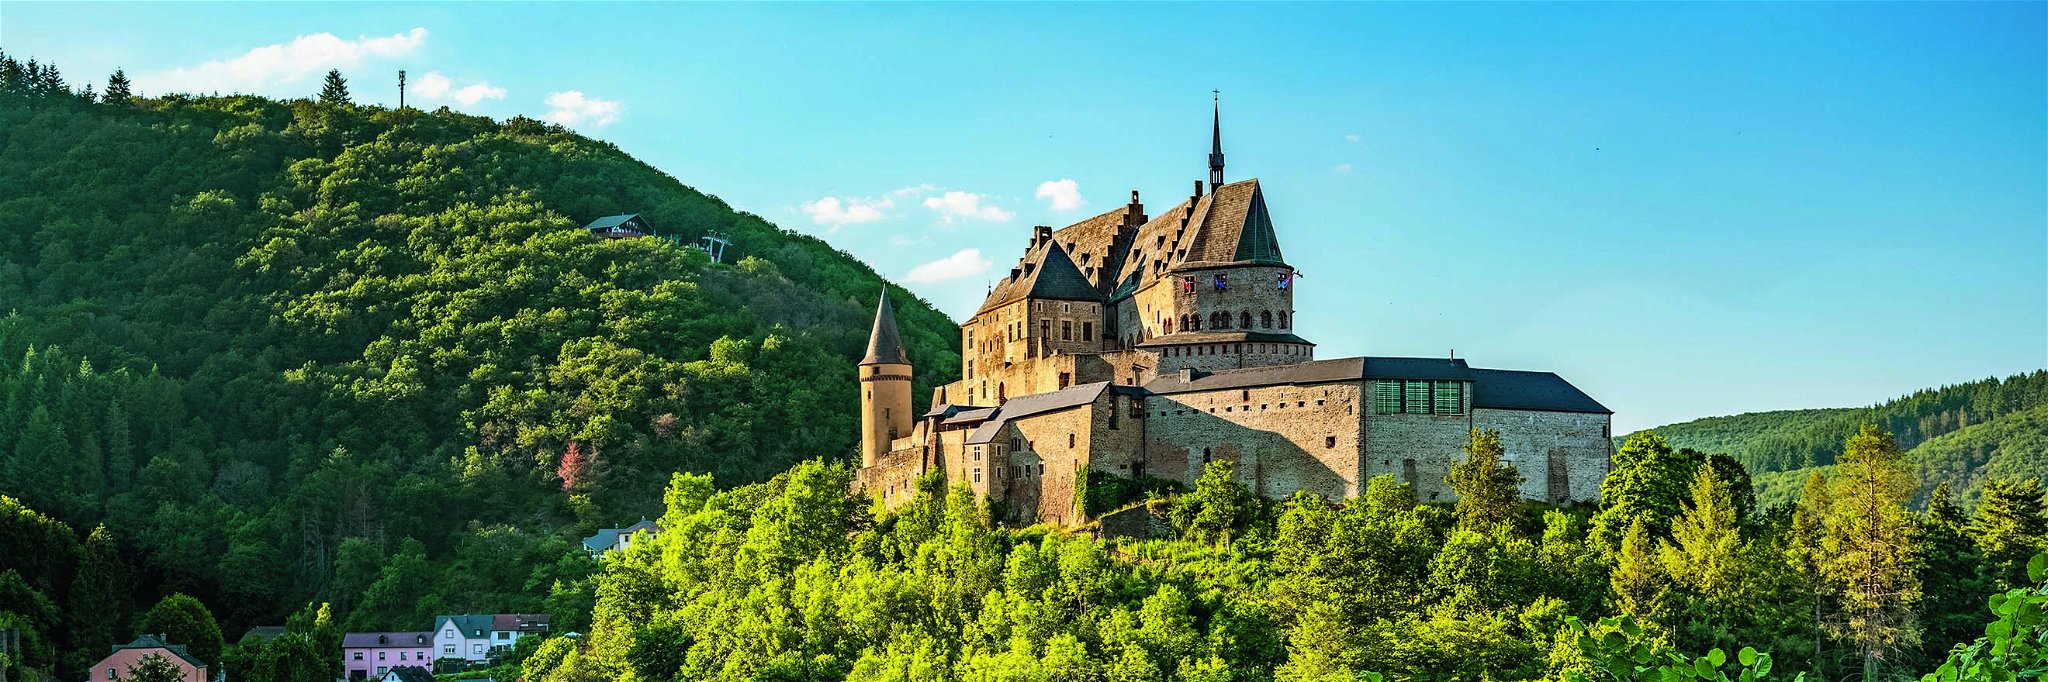 The magnificent Vianden Castle near the German border.